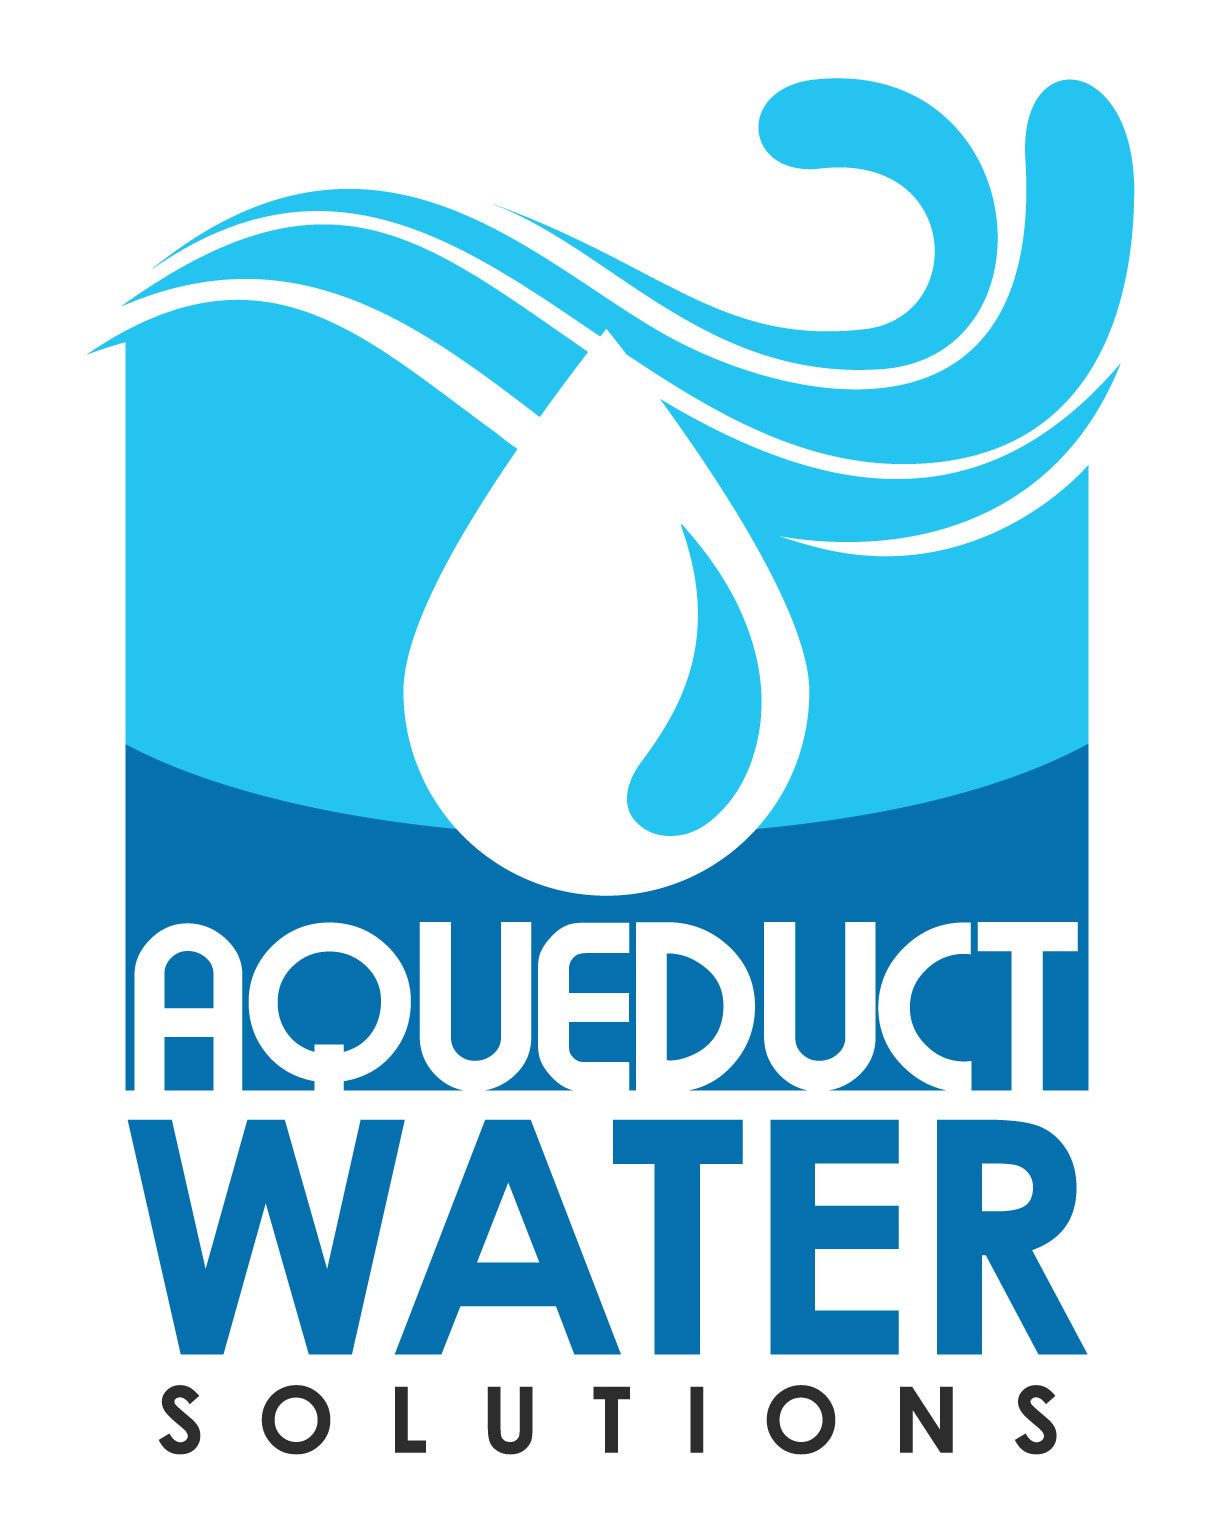 aqueduct water solutions logo